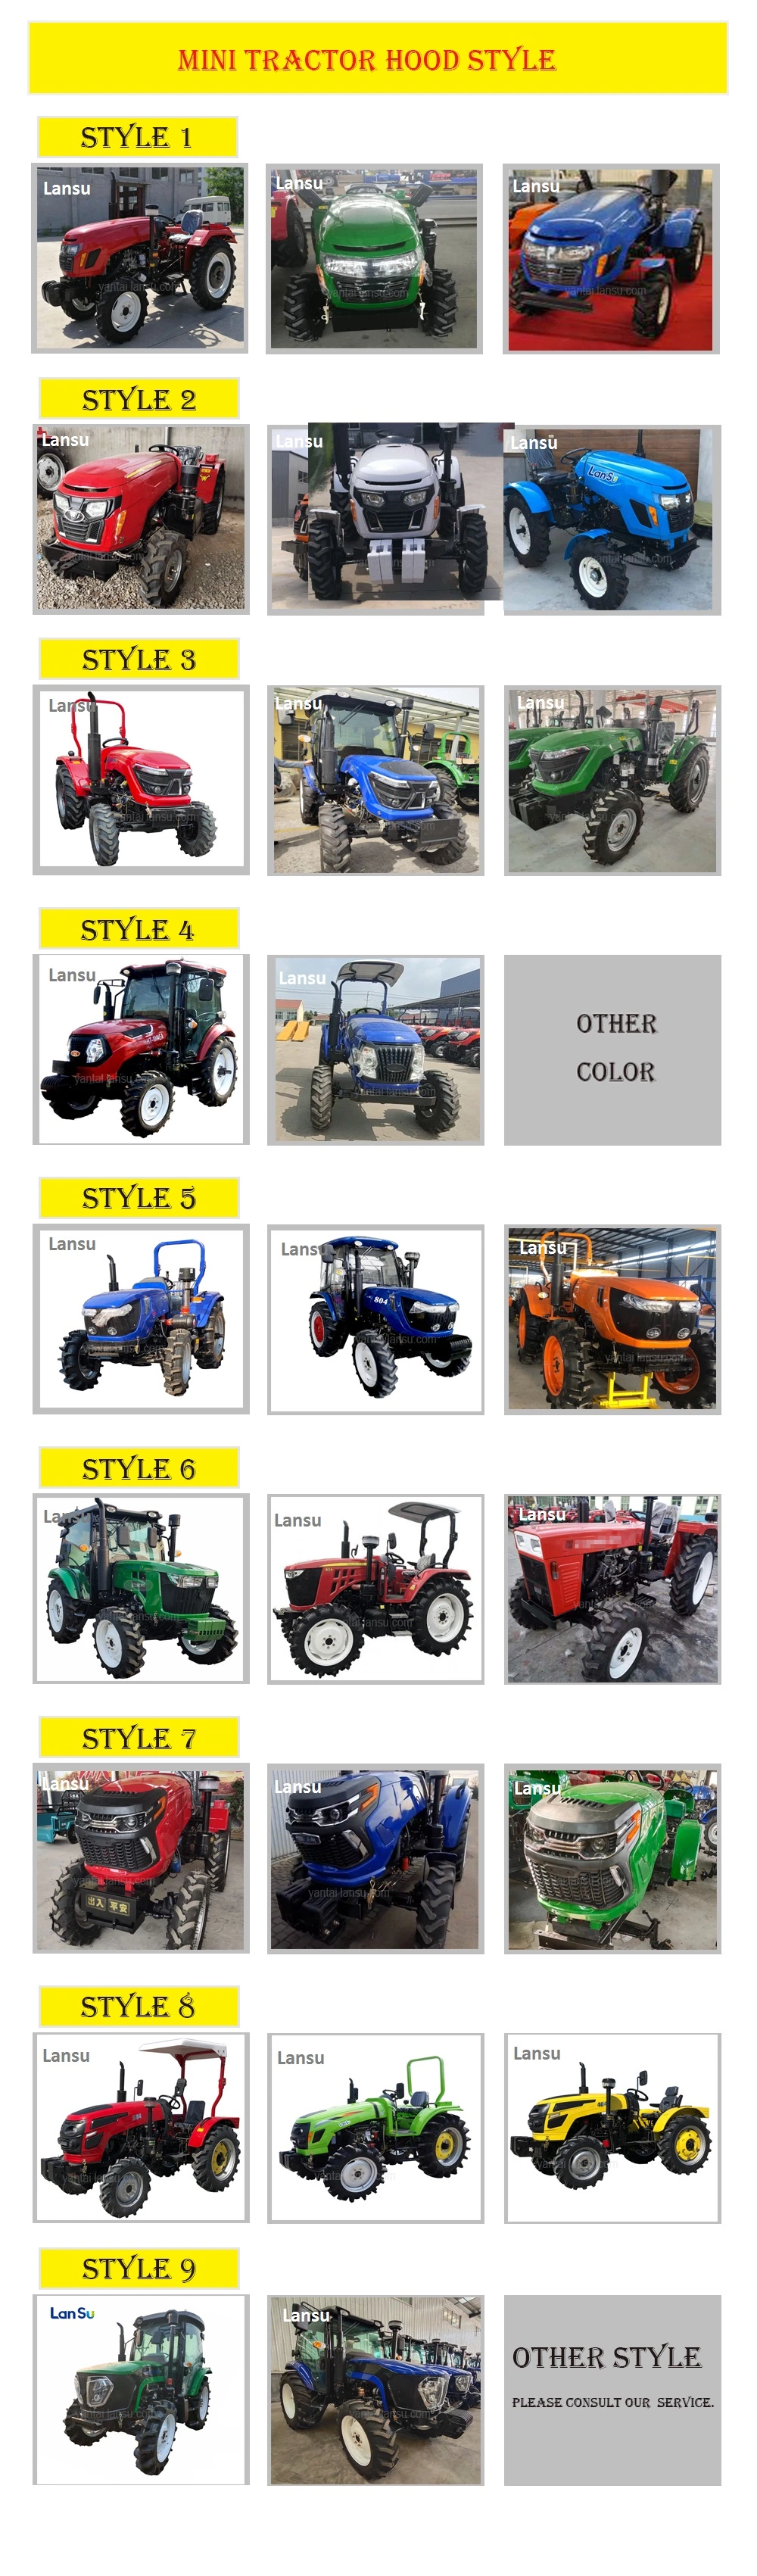 Buy Cheap Chinese Made in China Price De Agricultura Tractores Mini Tractores Agricolas Mini 4X4 Cheap Small 4WD Farming Tractors Mini Farm Tractor for Sale